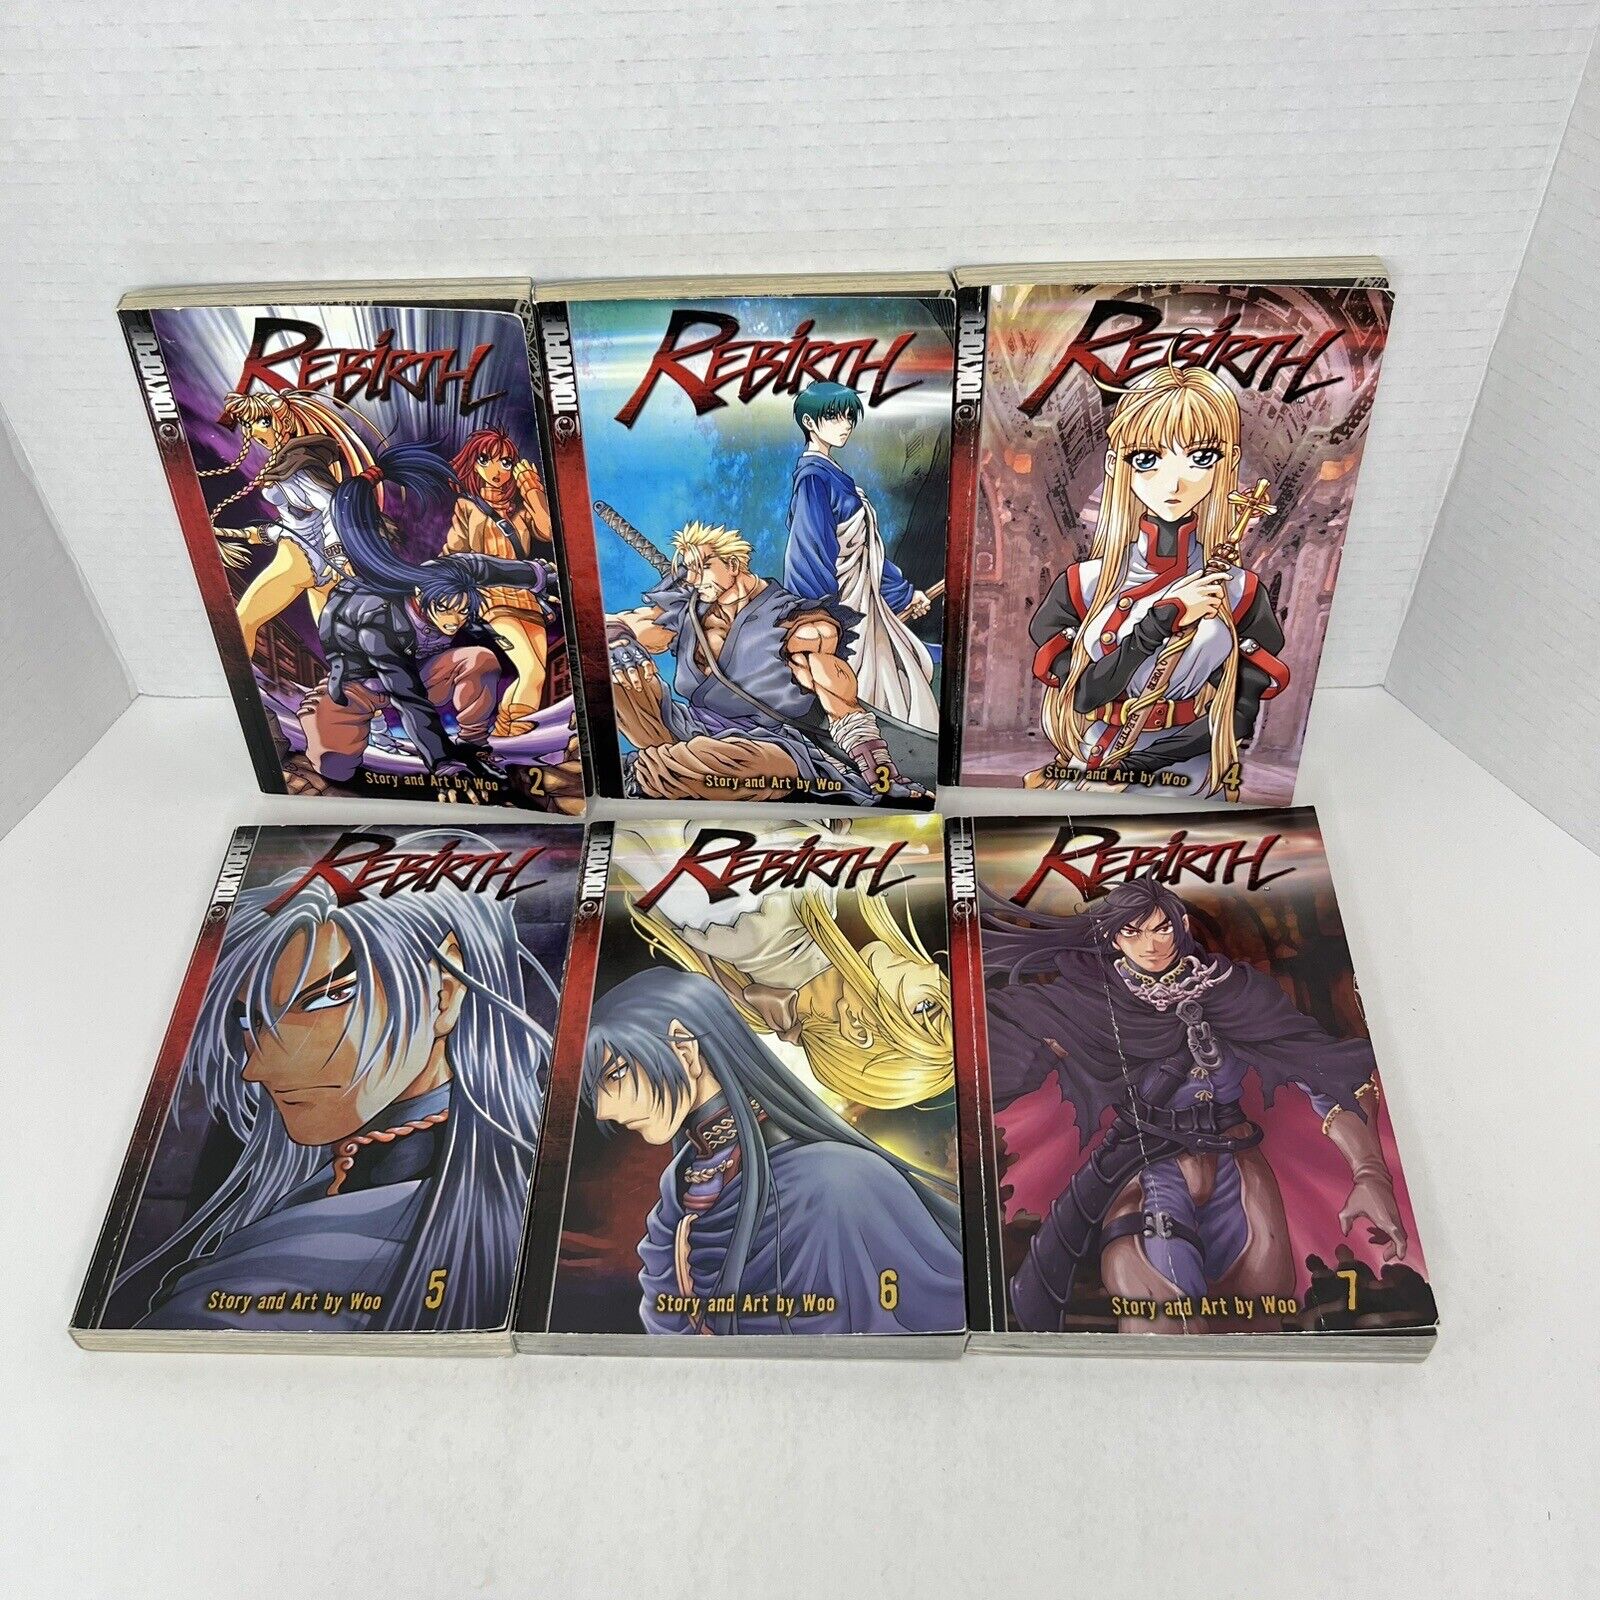 LOT (6) REBIRTH Manga Series Volumes #2-7; Story and Art by Woo, First Printings